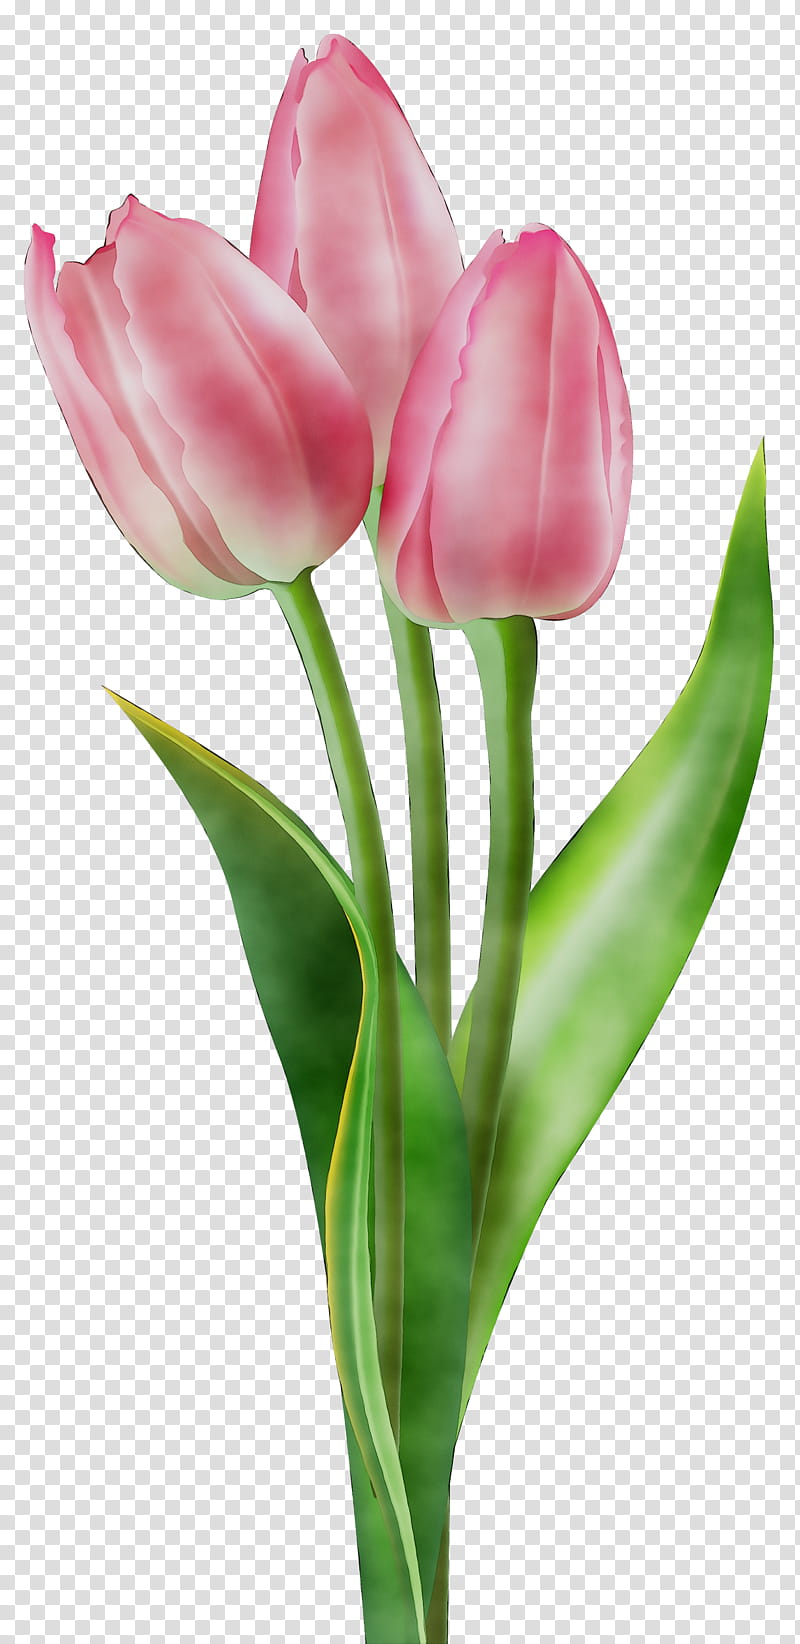 Lily Flower, Tulip, Pink Flowers, Painting, Flower Bouquet, Floral Design, Vase Tulip, Tulip Vase transparent background PNG clipart